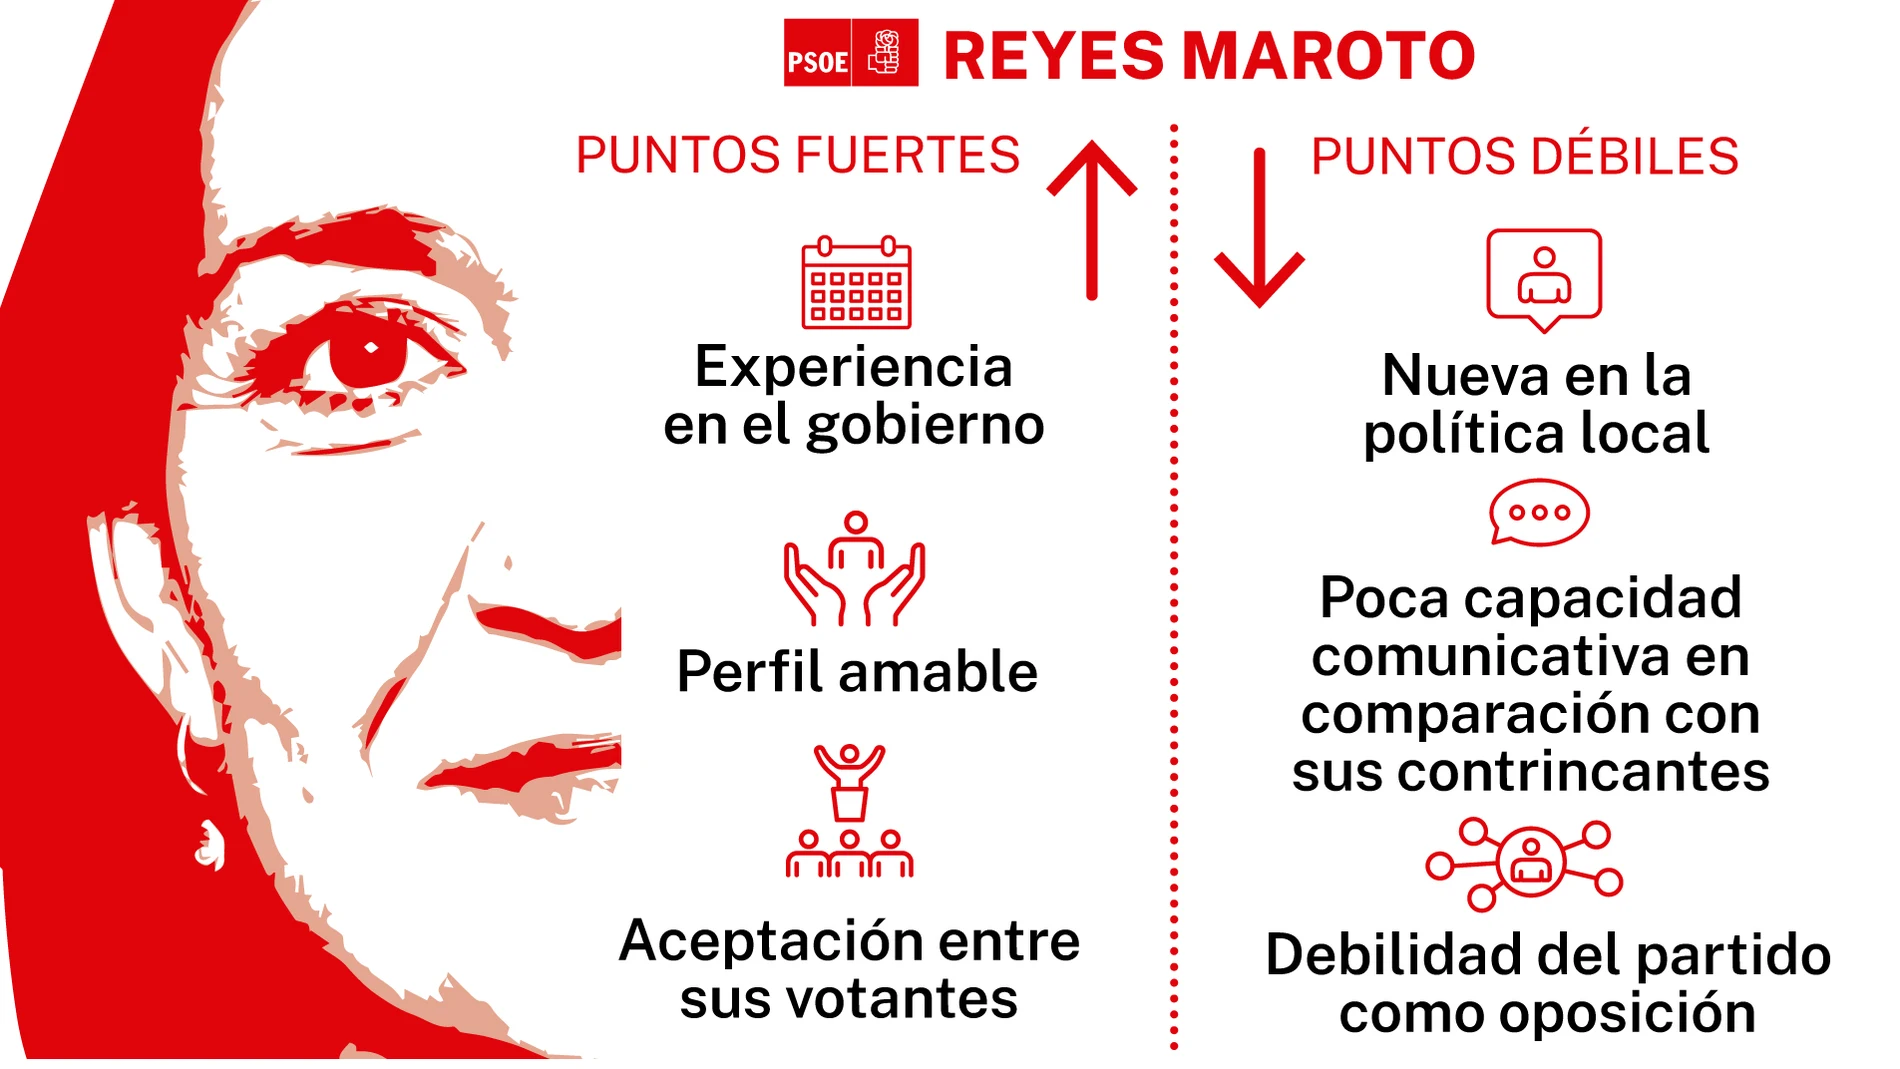 Puntos fuertes/débiles Reyes Maroto PSOE